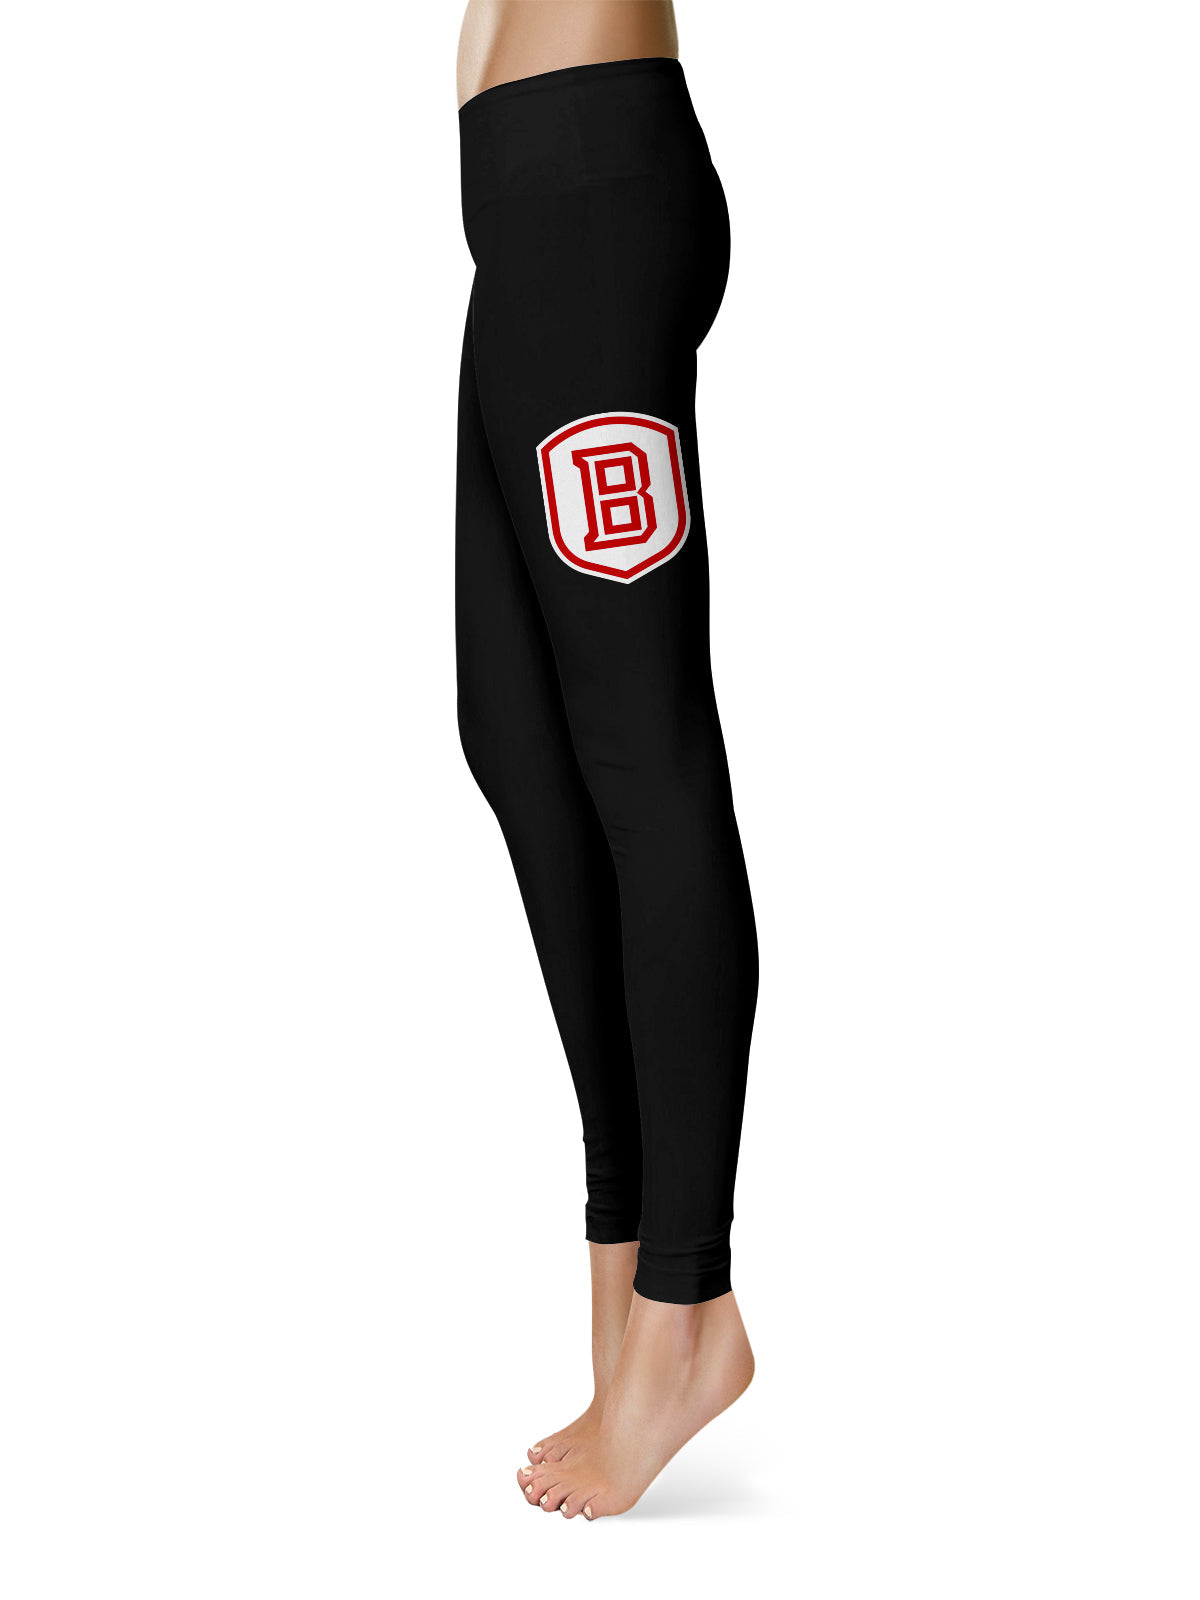 Bradley Braves Vive La Fete Game Day Collegiate Large Logo on Thigh Women Black Yoga Leggings 2.5 Waist Tights